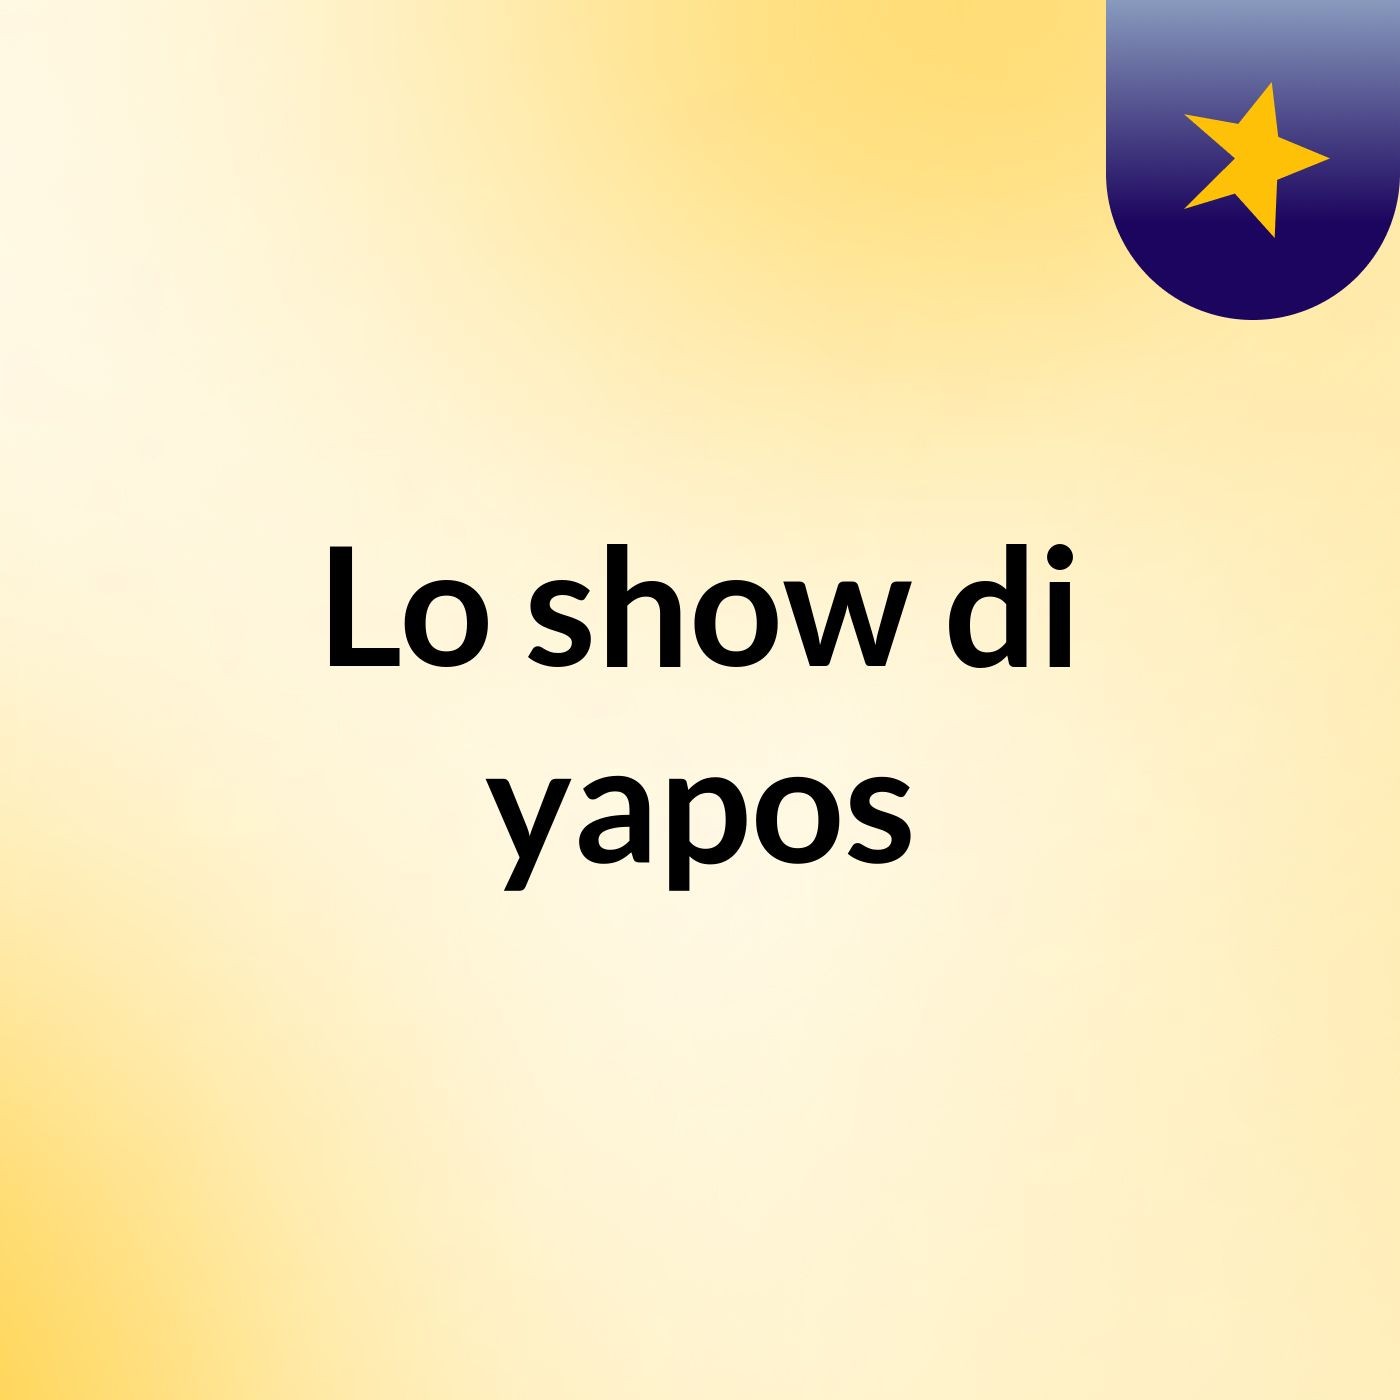 Lo show di yapos